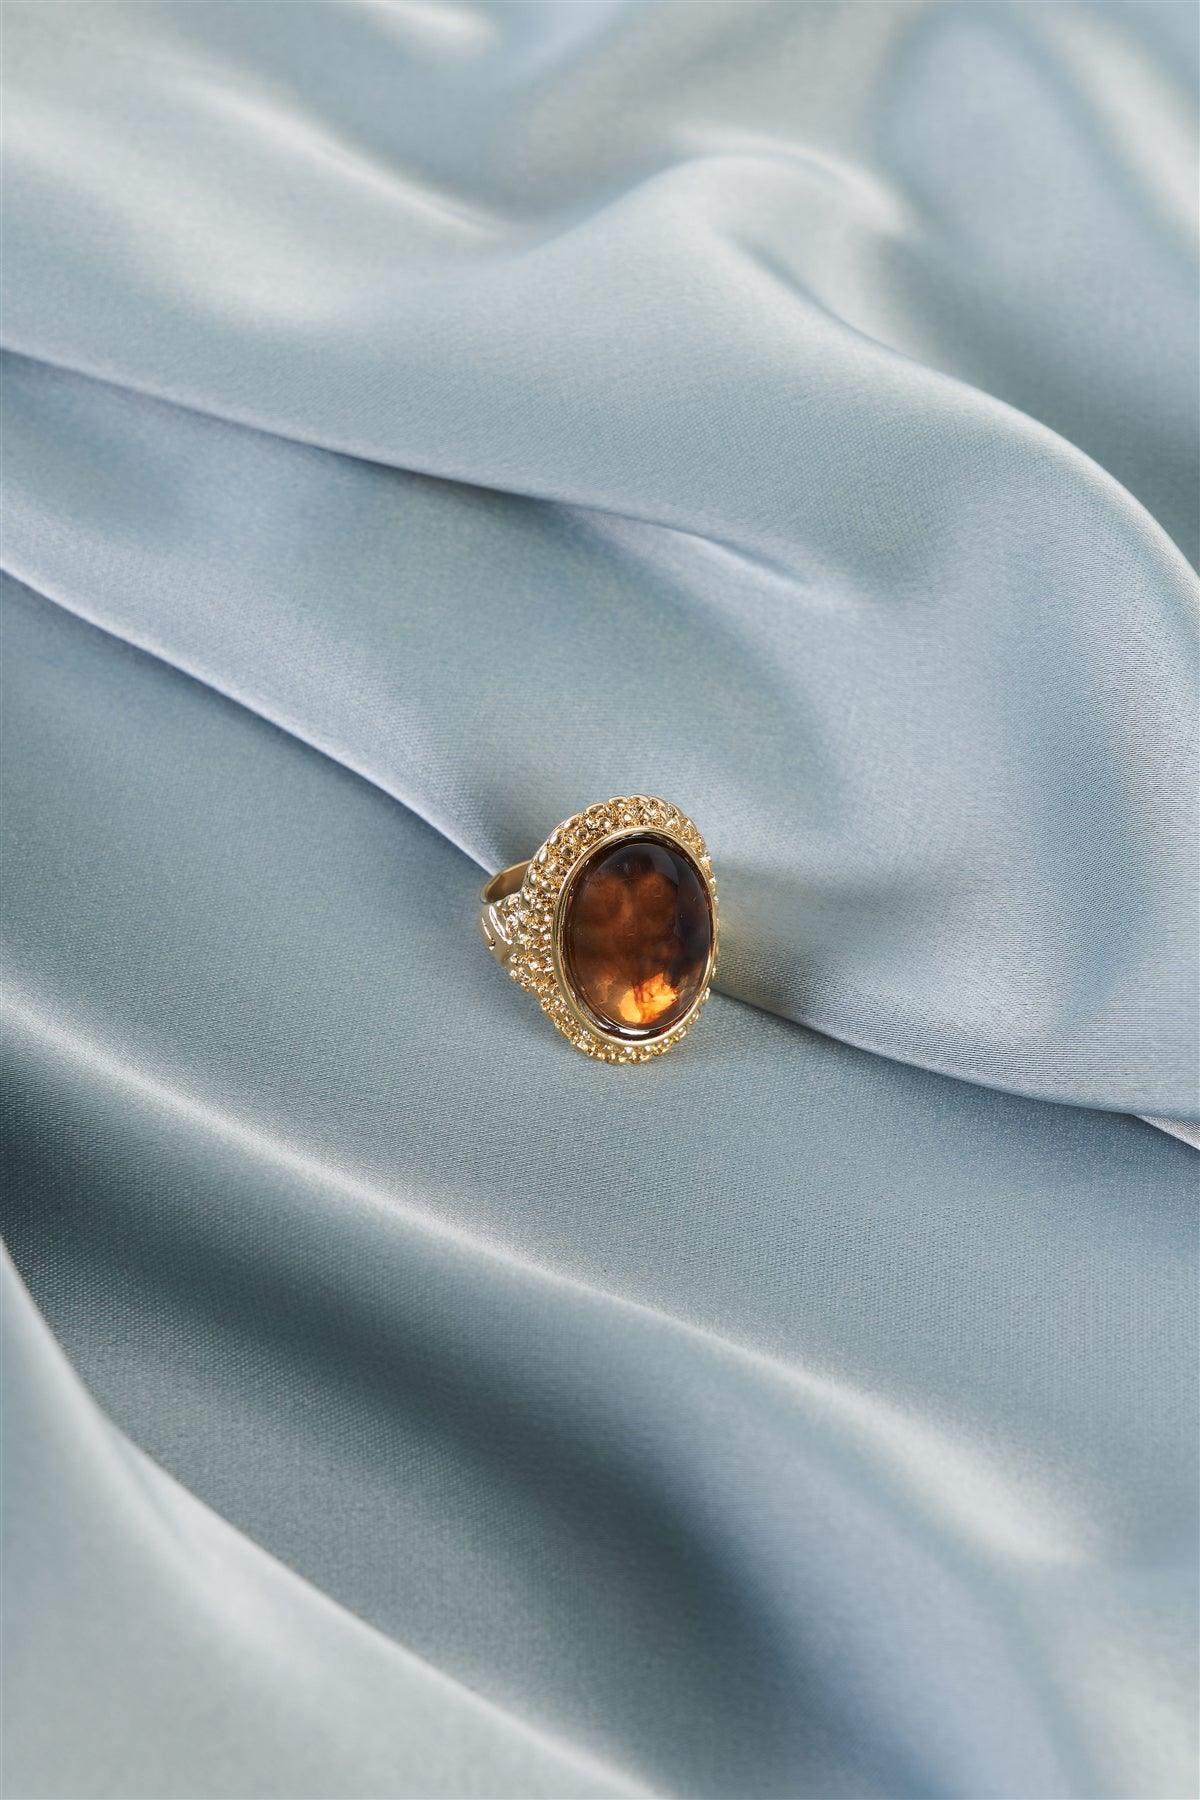 Brown Oval Gemstone Ring /1 Piece